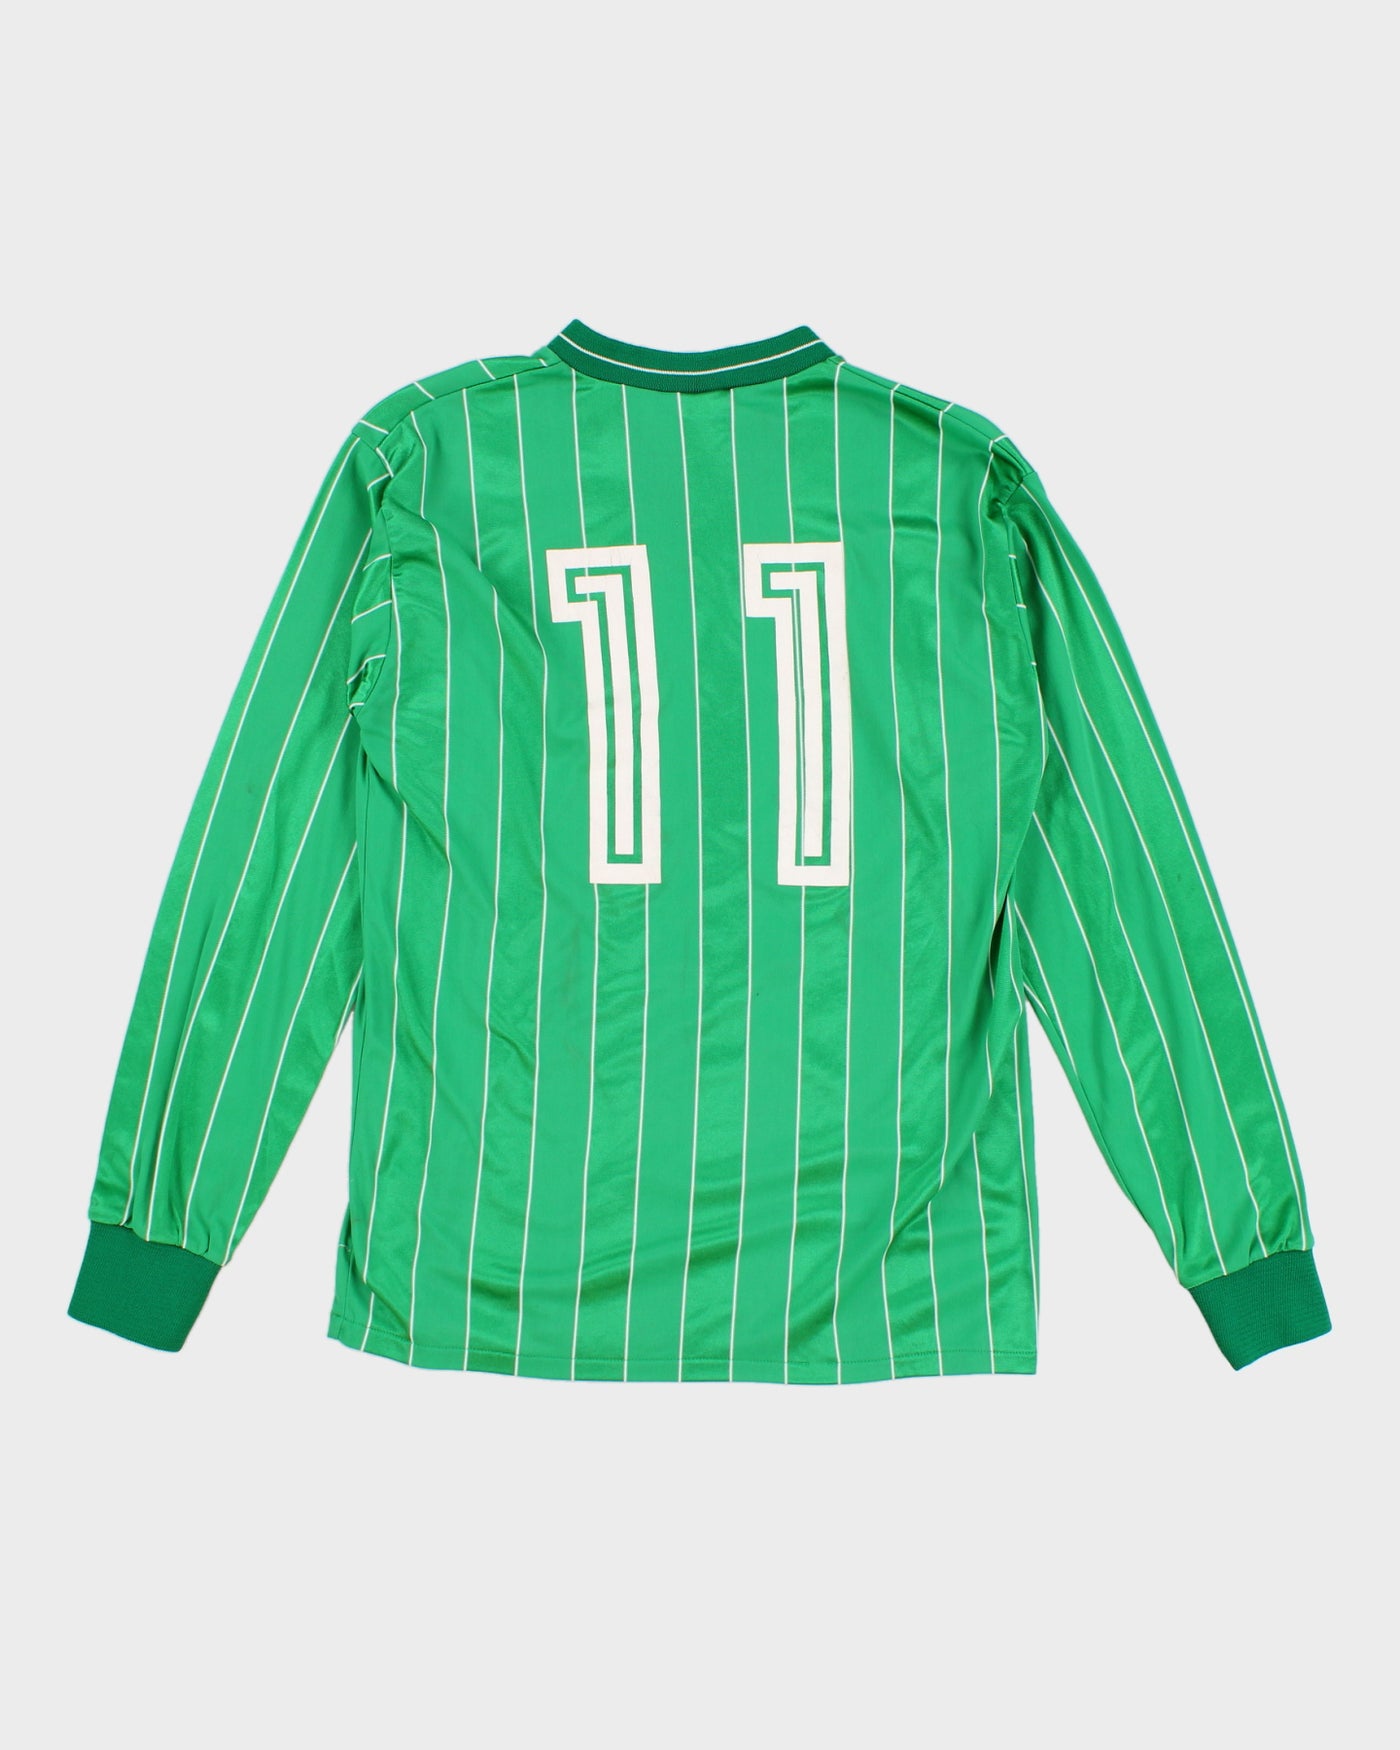 Vintage 80s Surrey United Soccer Club Football Shirt - M